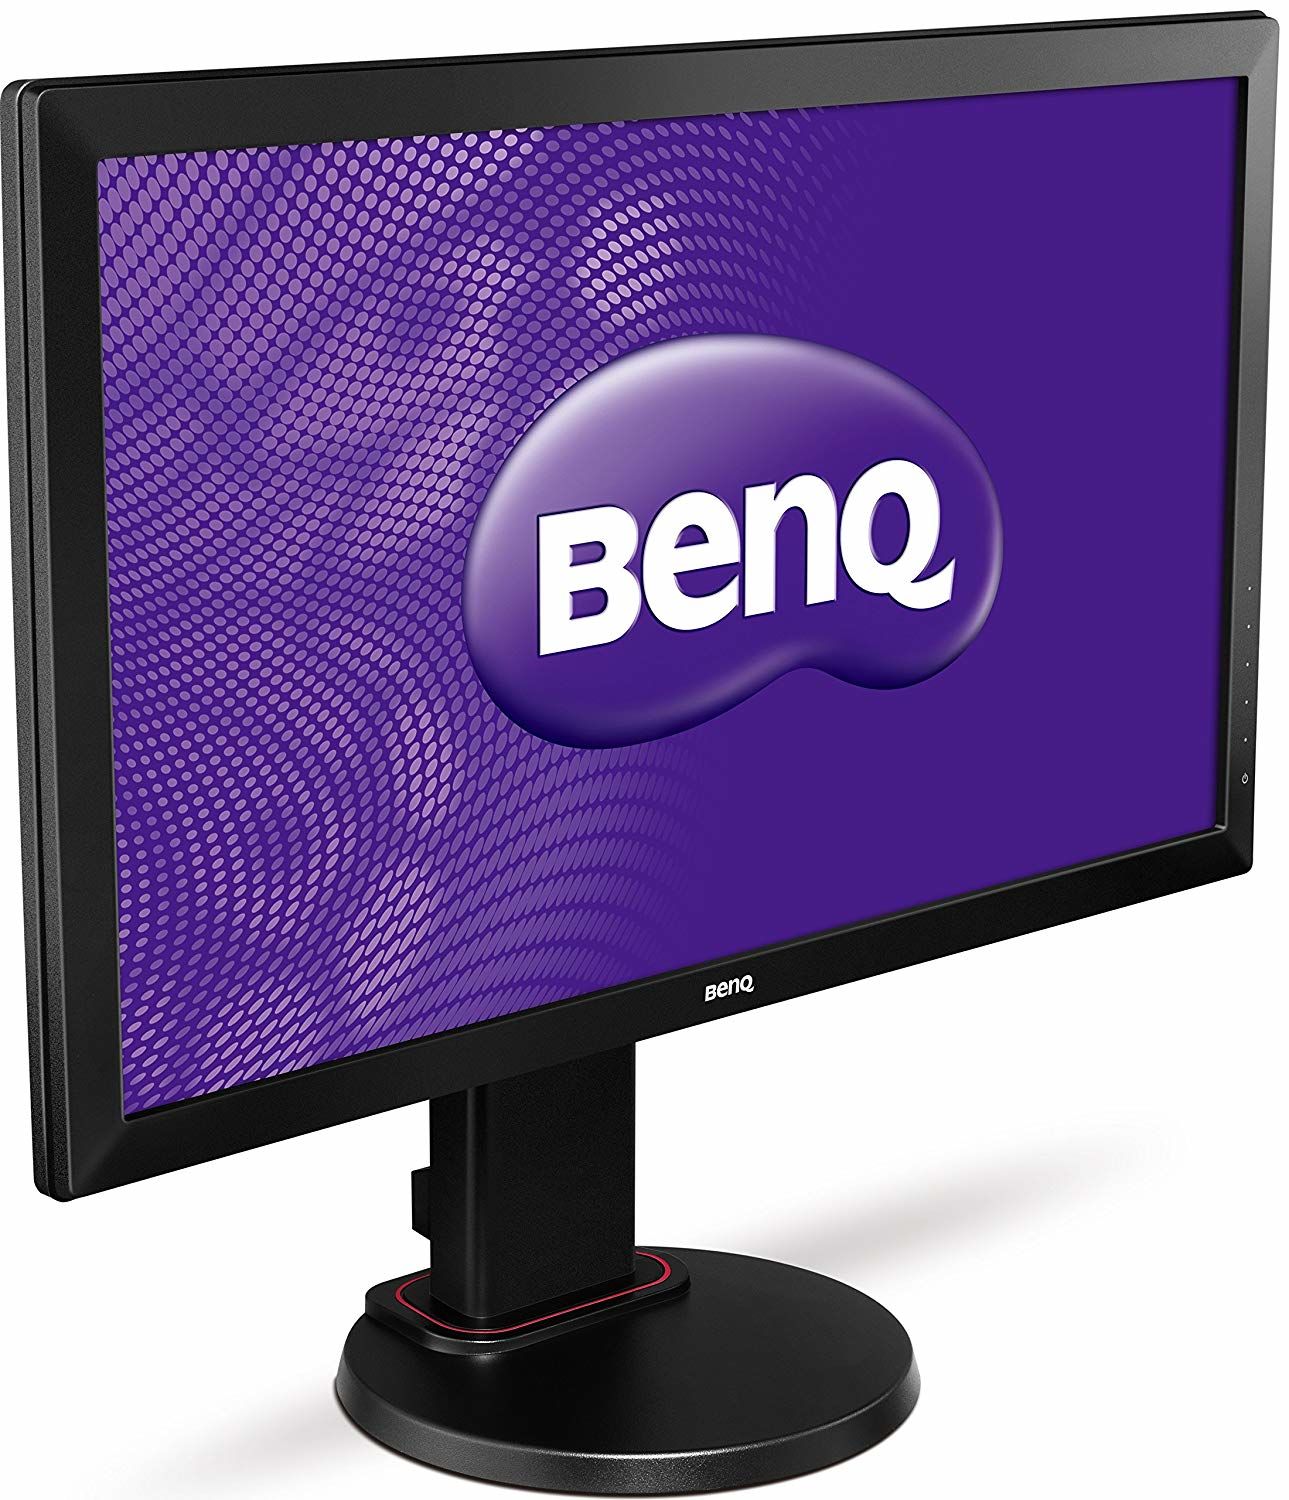 BENQ rl2450ht. Монитор BENQ 24. BENQ LCD Monitor August 2009. Монитор BENQ rl2460h [24" LCD] (j4g04484sl0) {2016}.